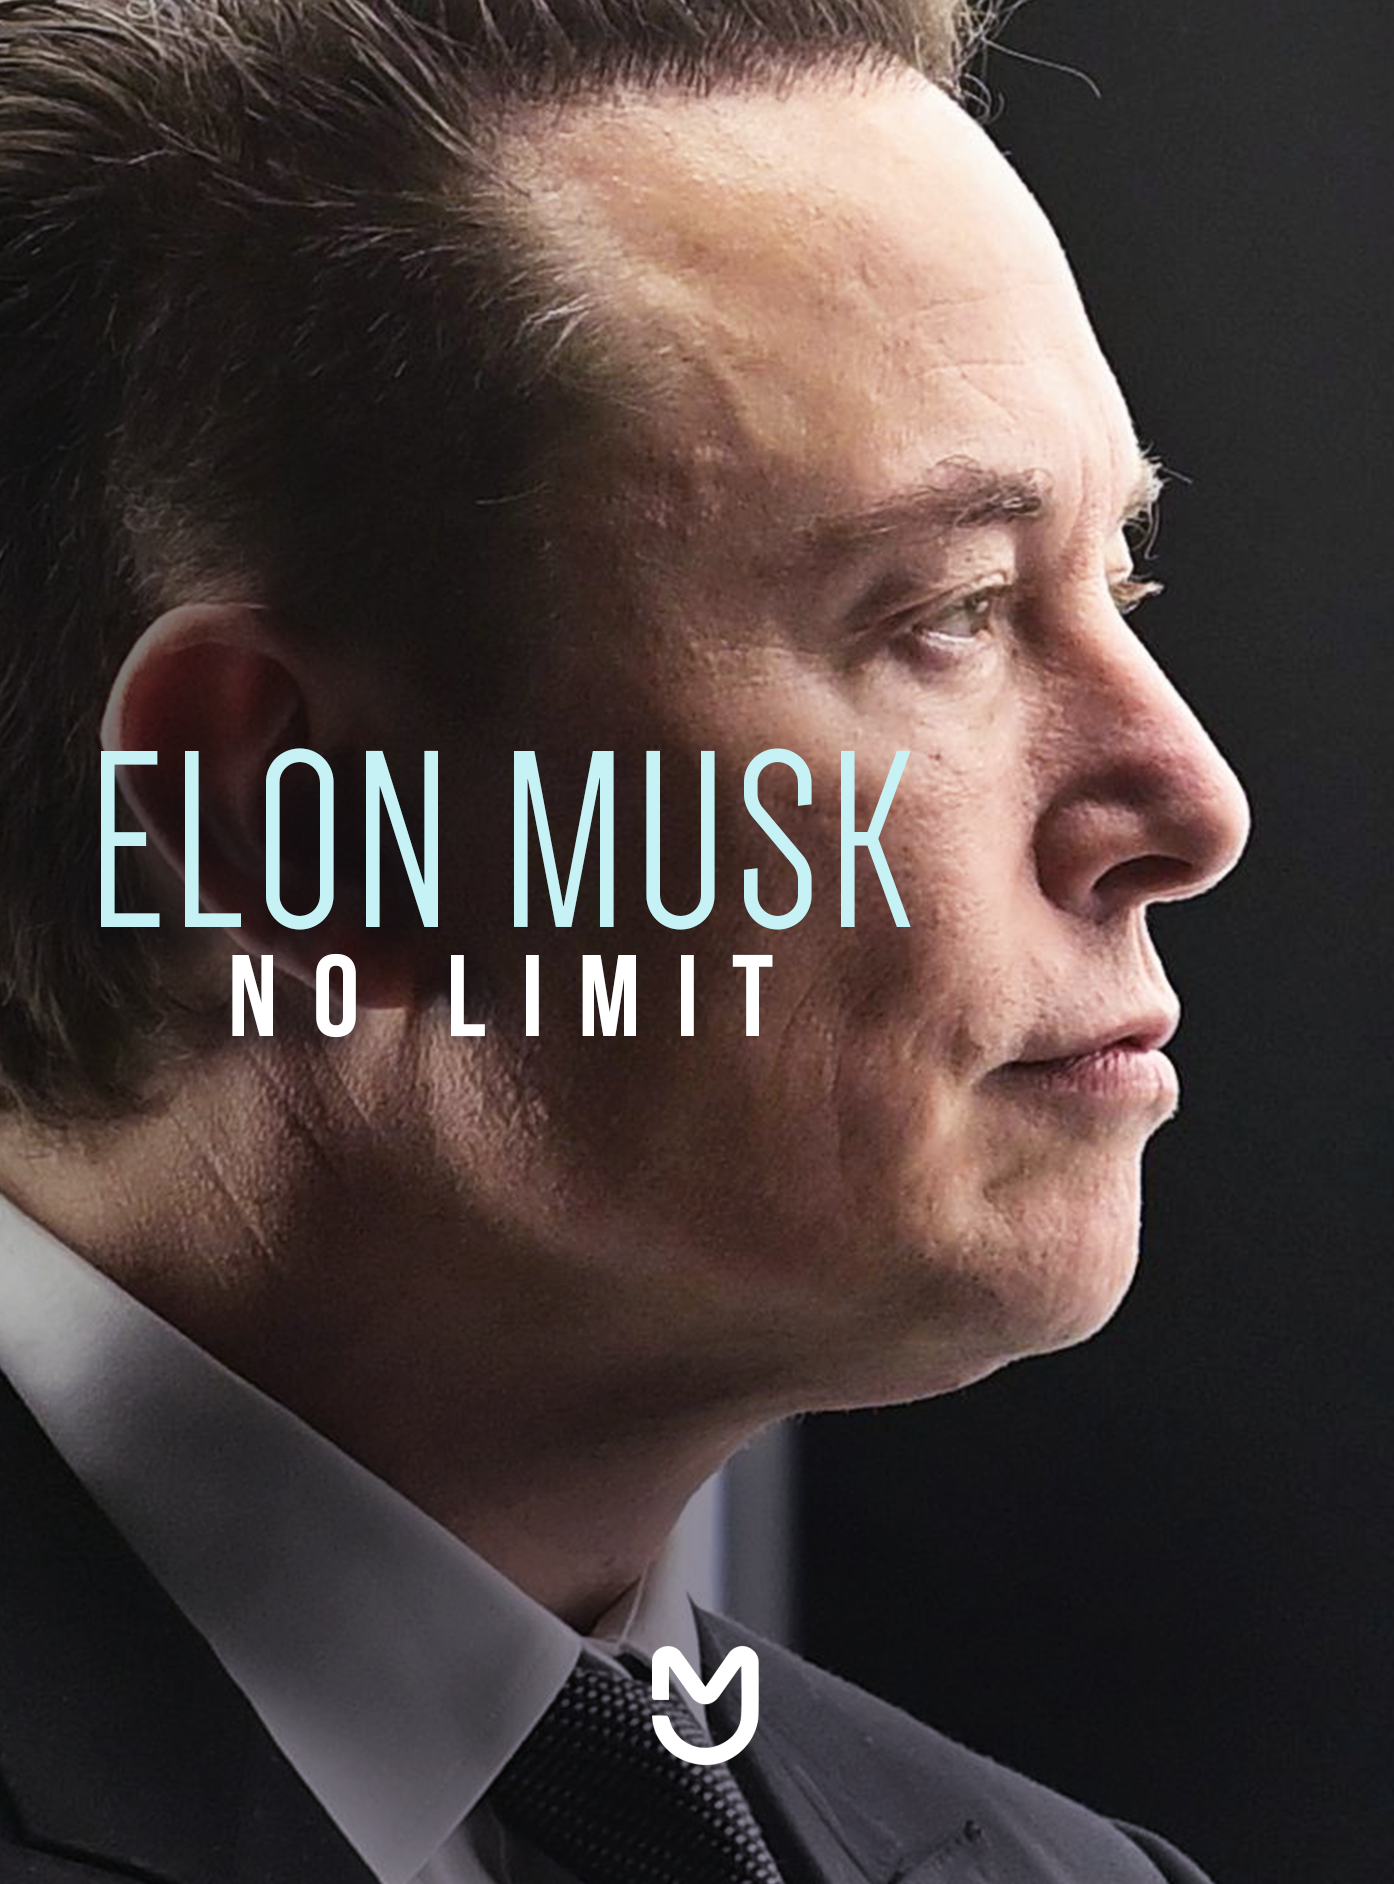 Elon musk, no limit